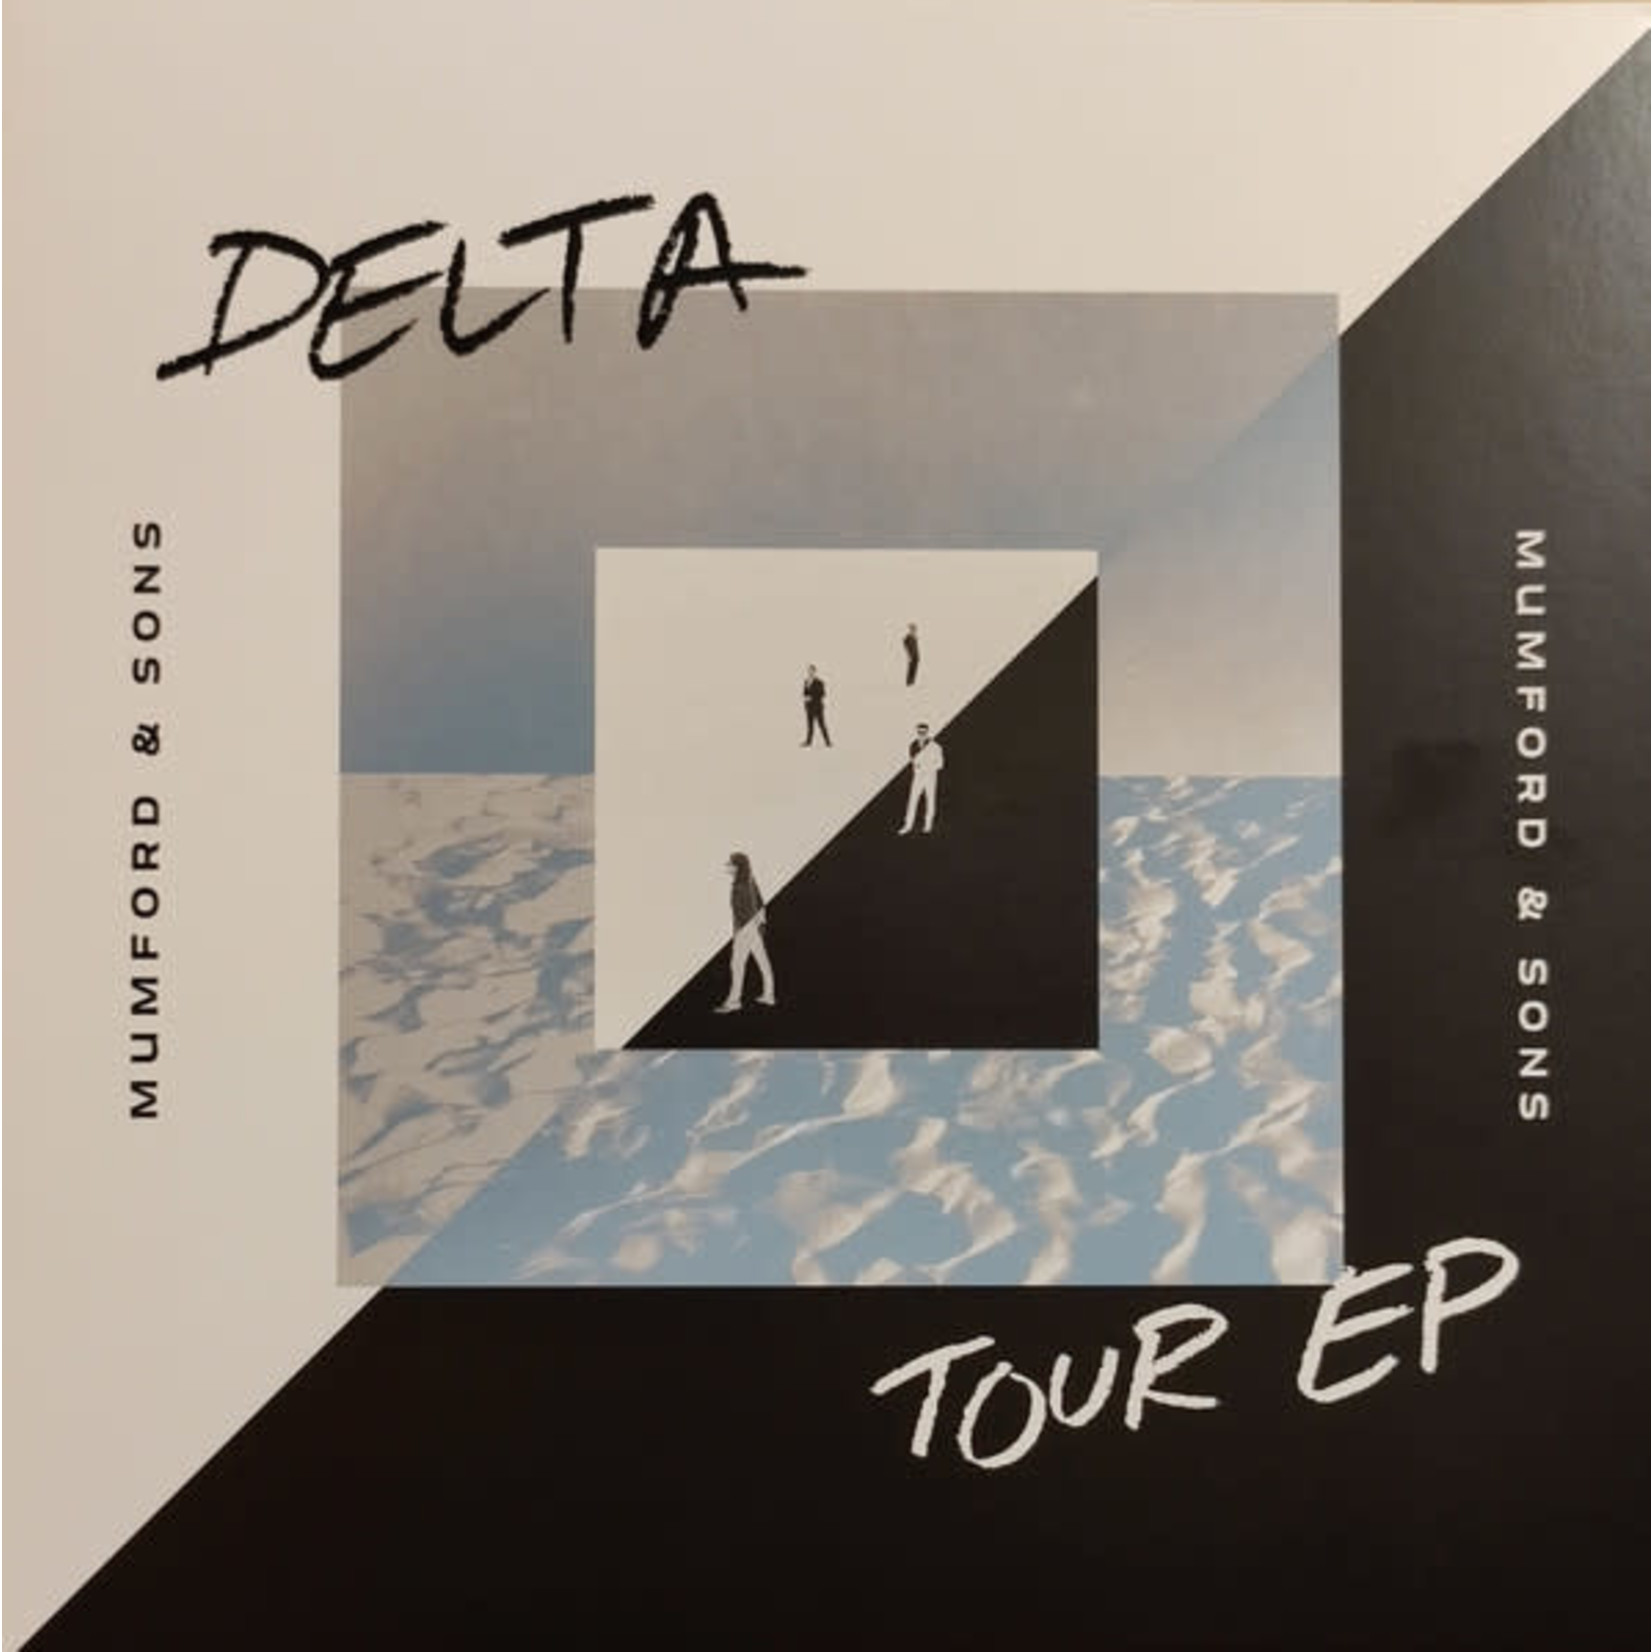 Glassnote Mumford & Sons - Delta Tour EP (12")